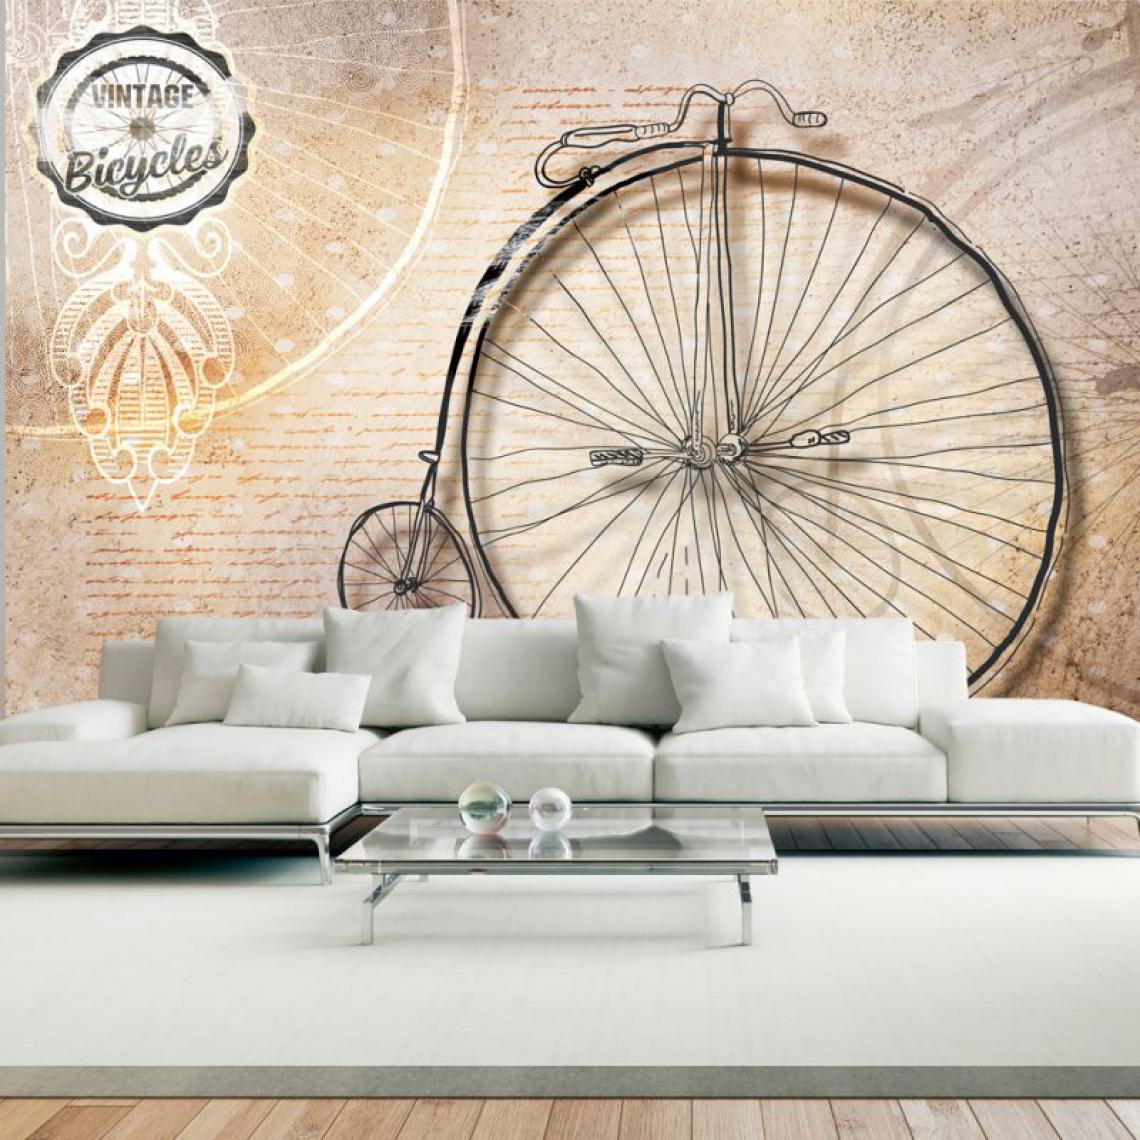 Artgeist - Papier peint - Vintage bicycles - sepia .Taille : 200x140 - Papier peint